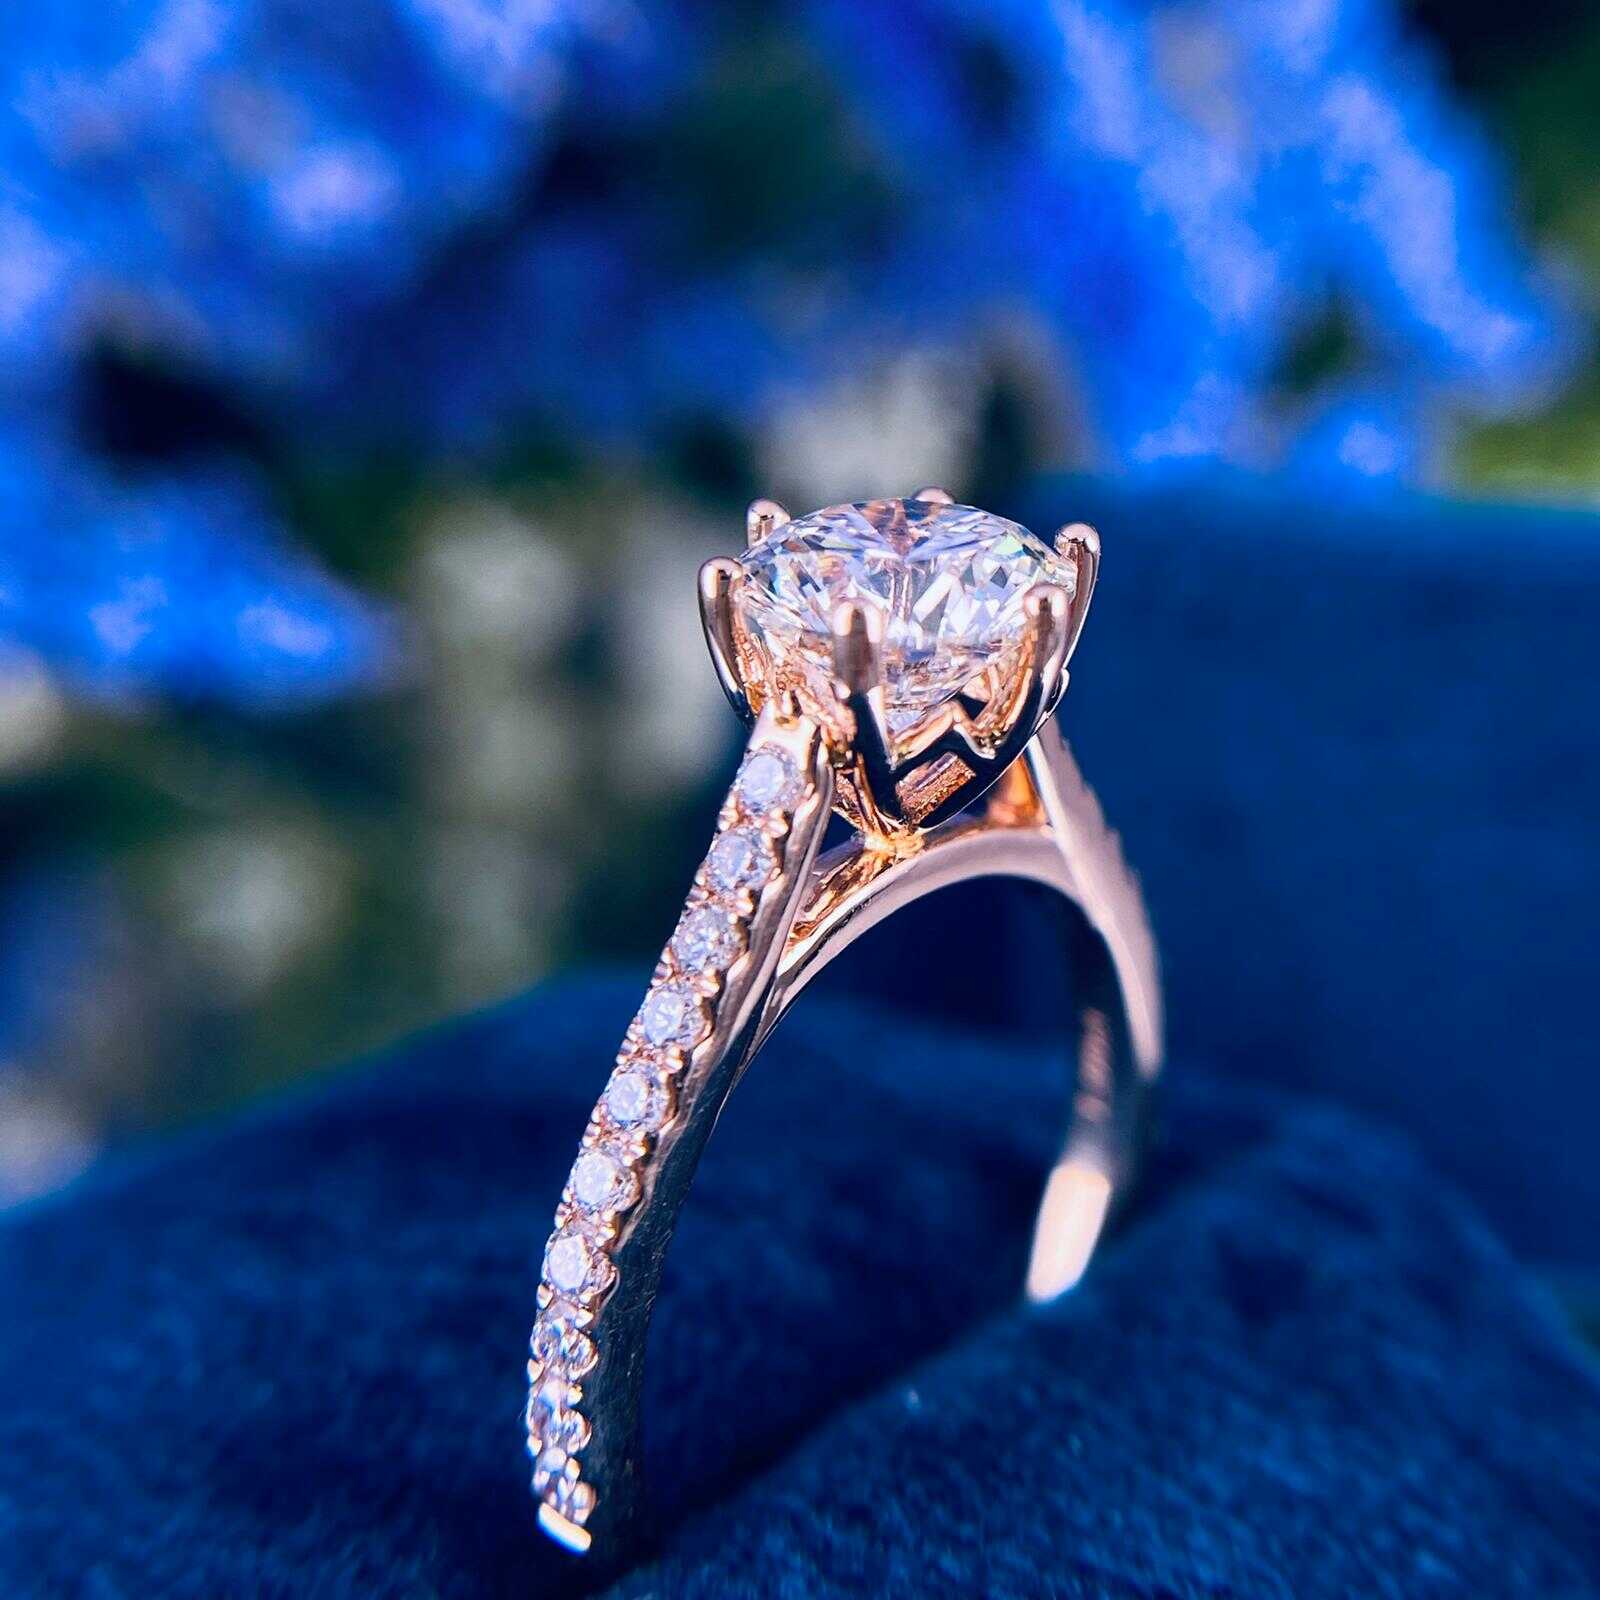 Top benefits of buying wedding rings online